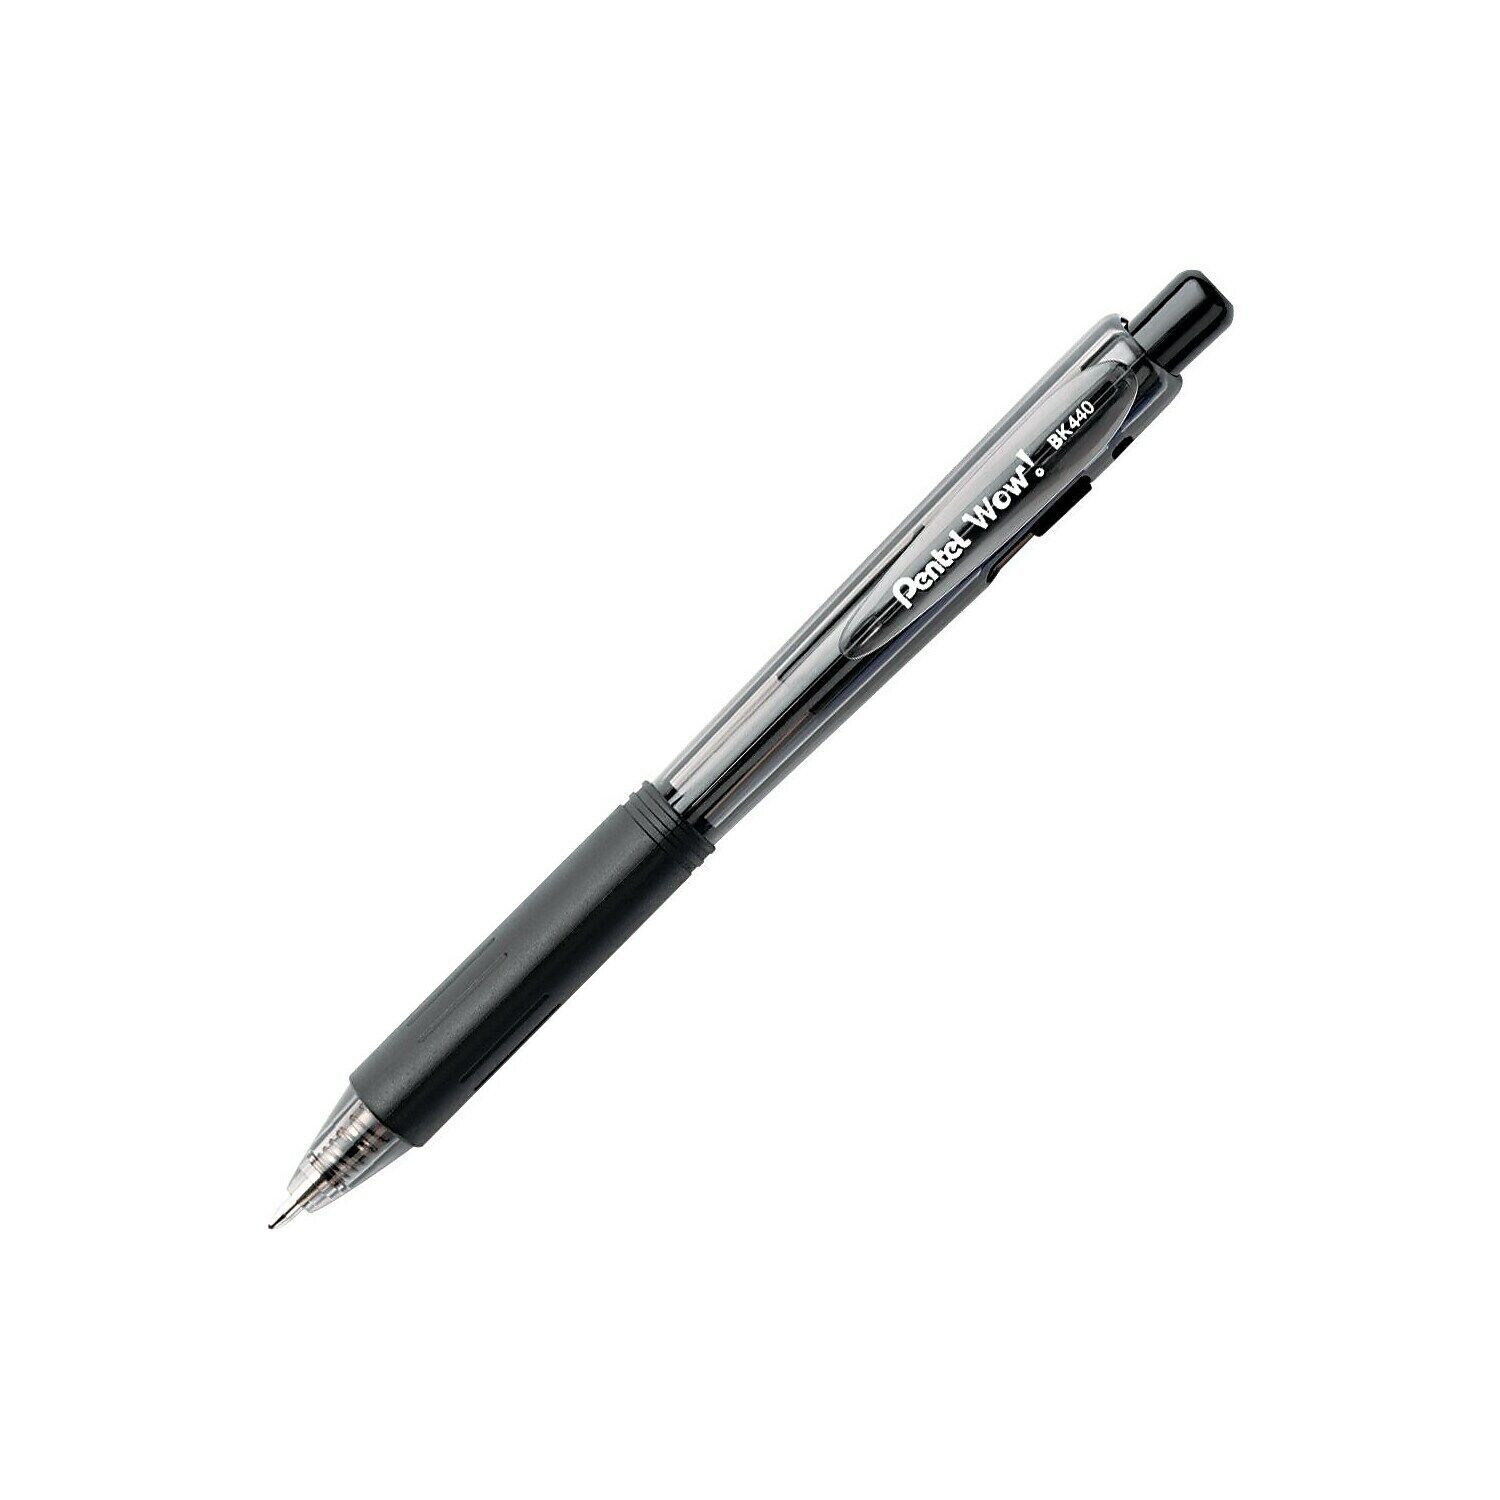 Paper Mate Flair Felt Tip Pen, 0.7mm, Medium Point, Purple Ink, 4-Count